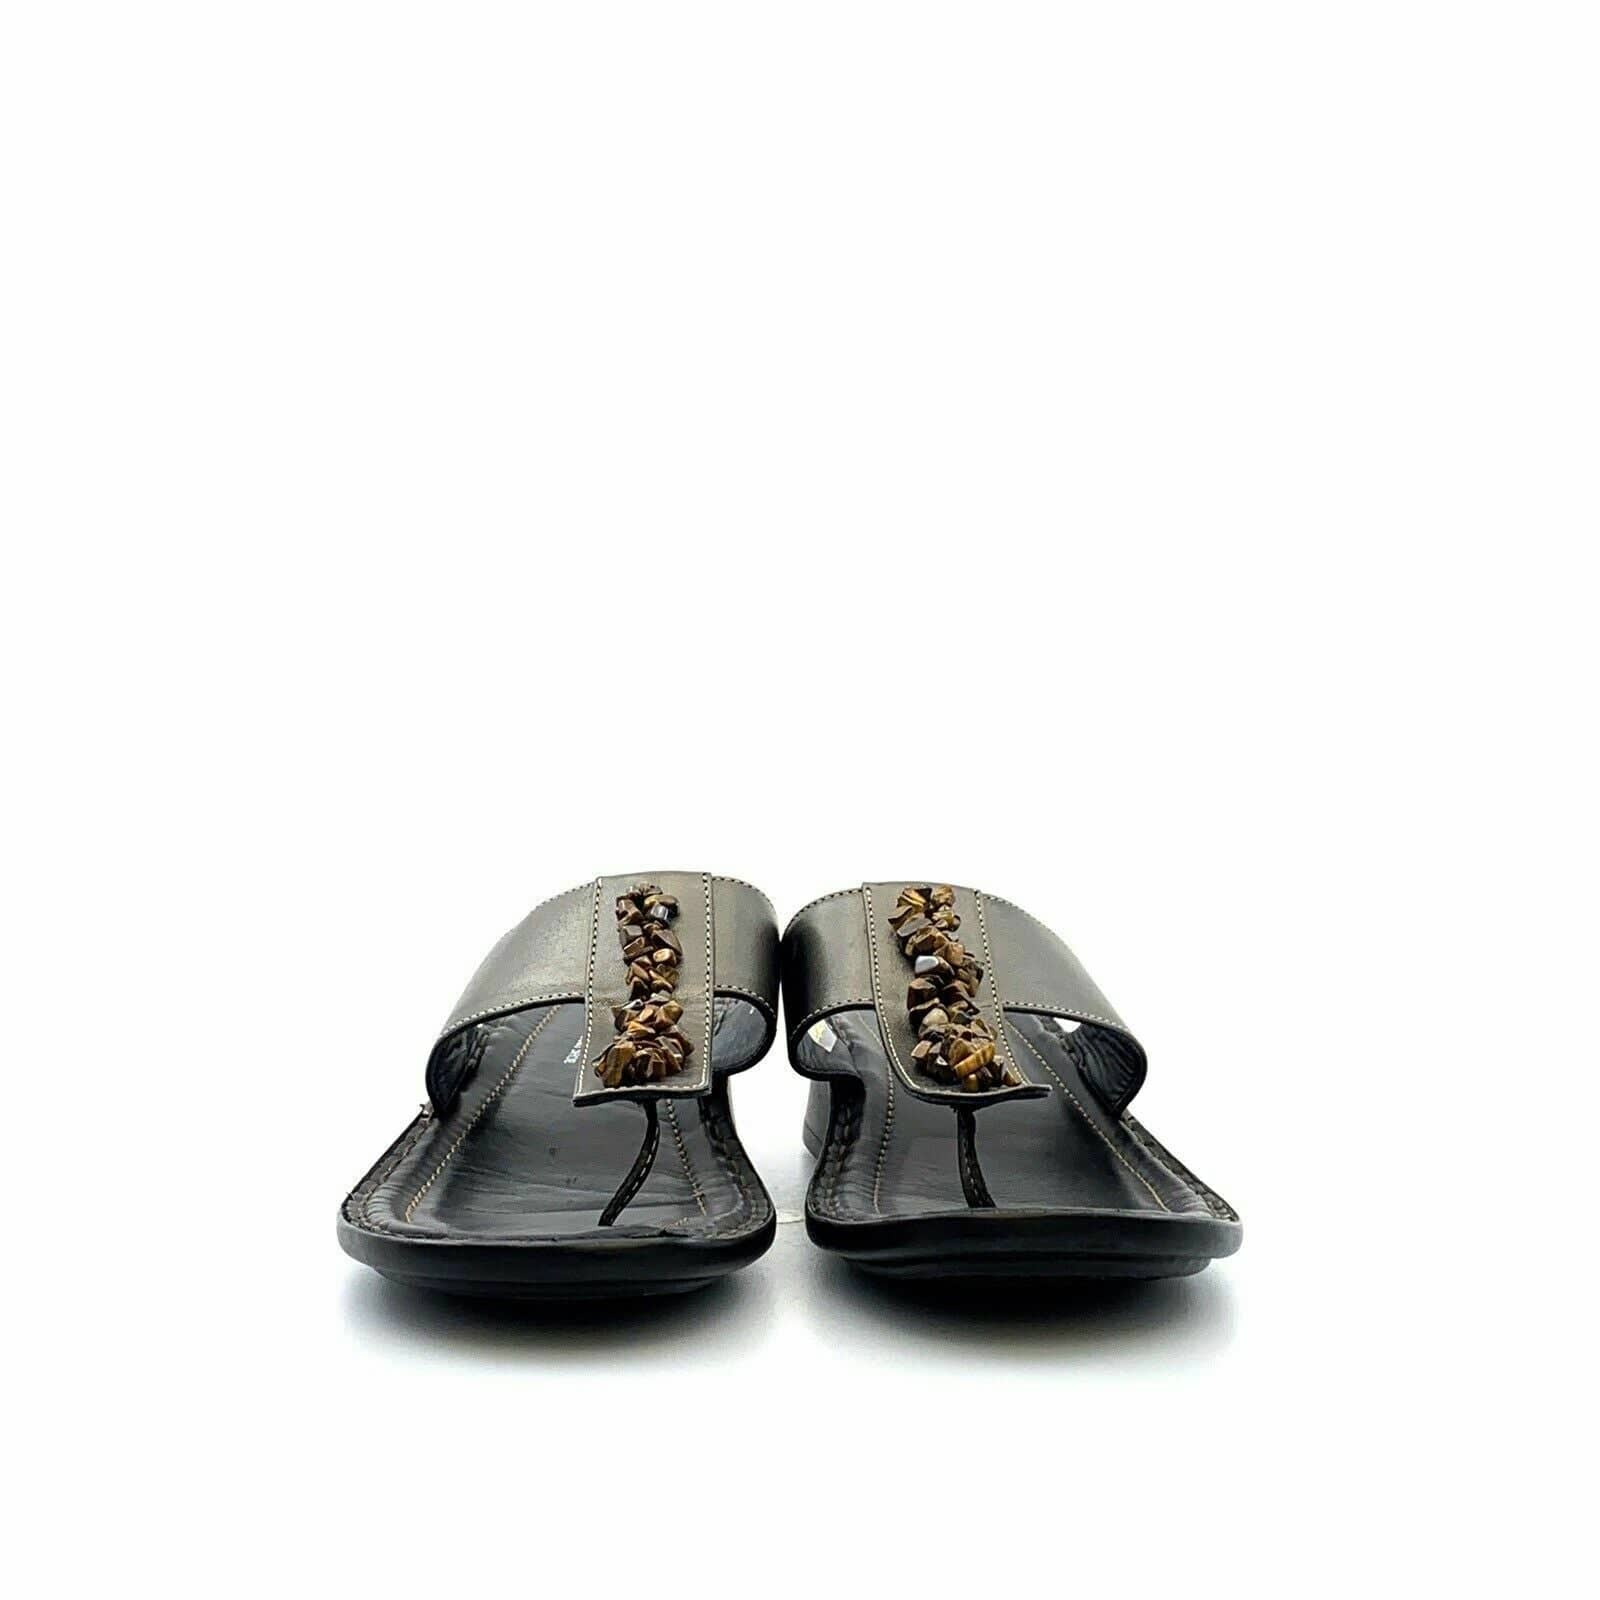 Josef Seibel Womens Thong Sandals Shoes, Titanium Gray - Size 9M - parsimonyshoppes